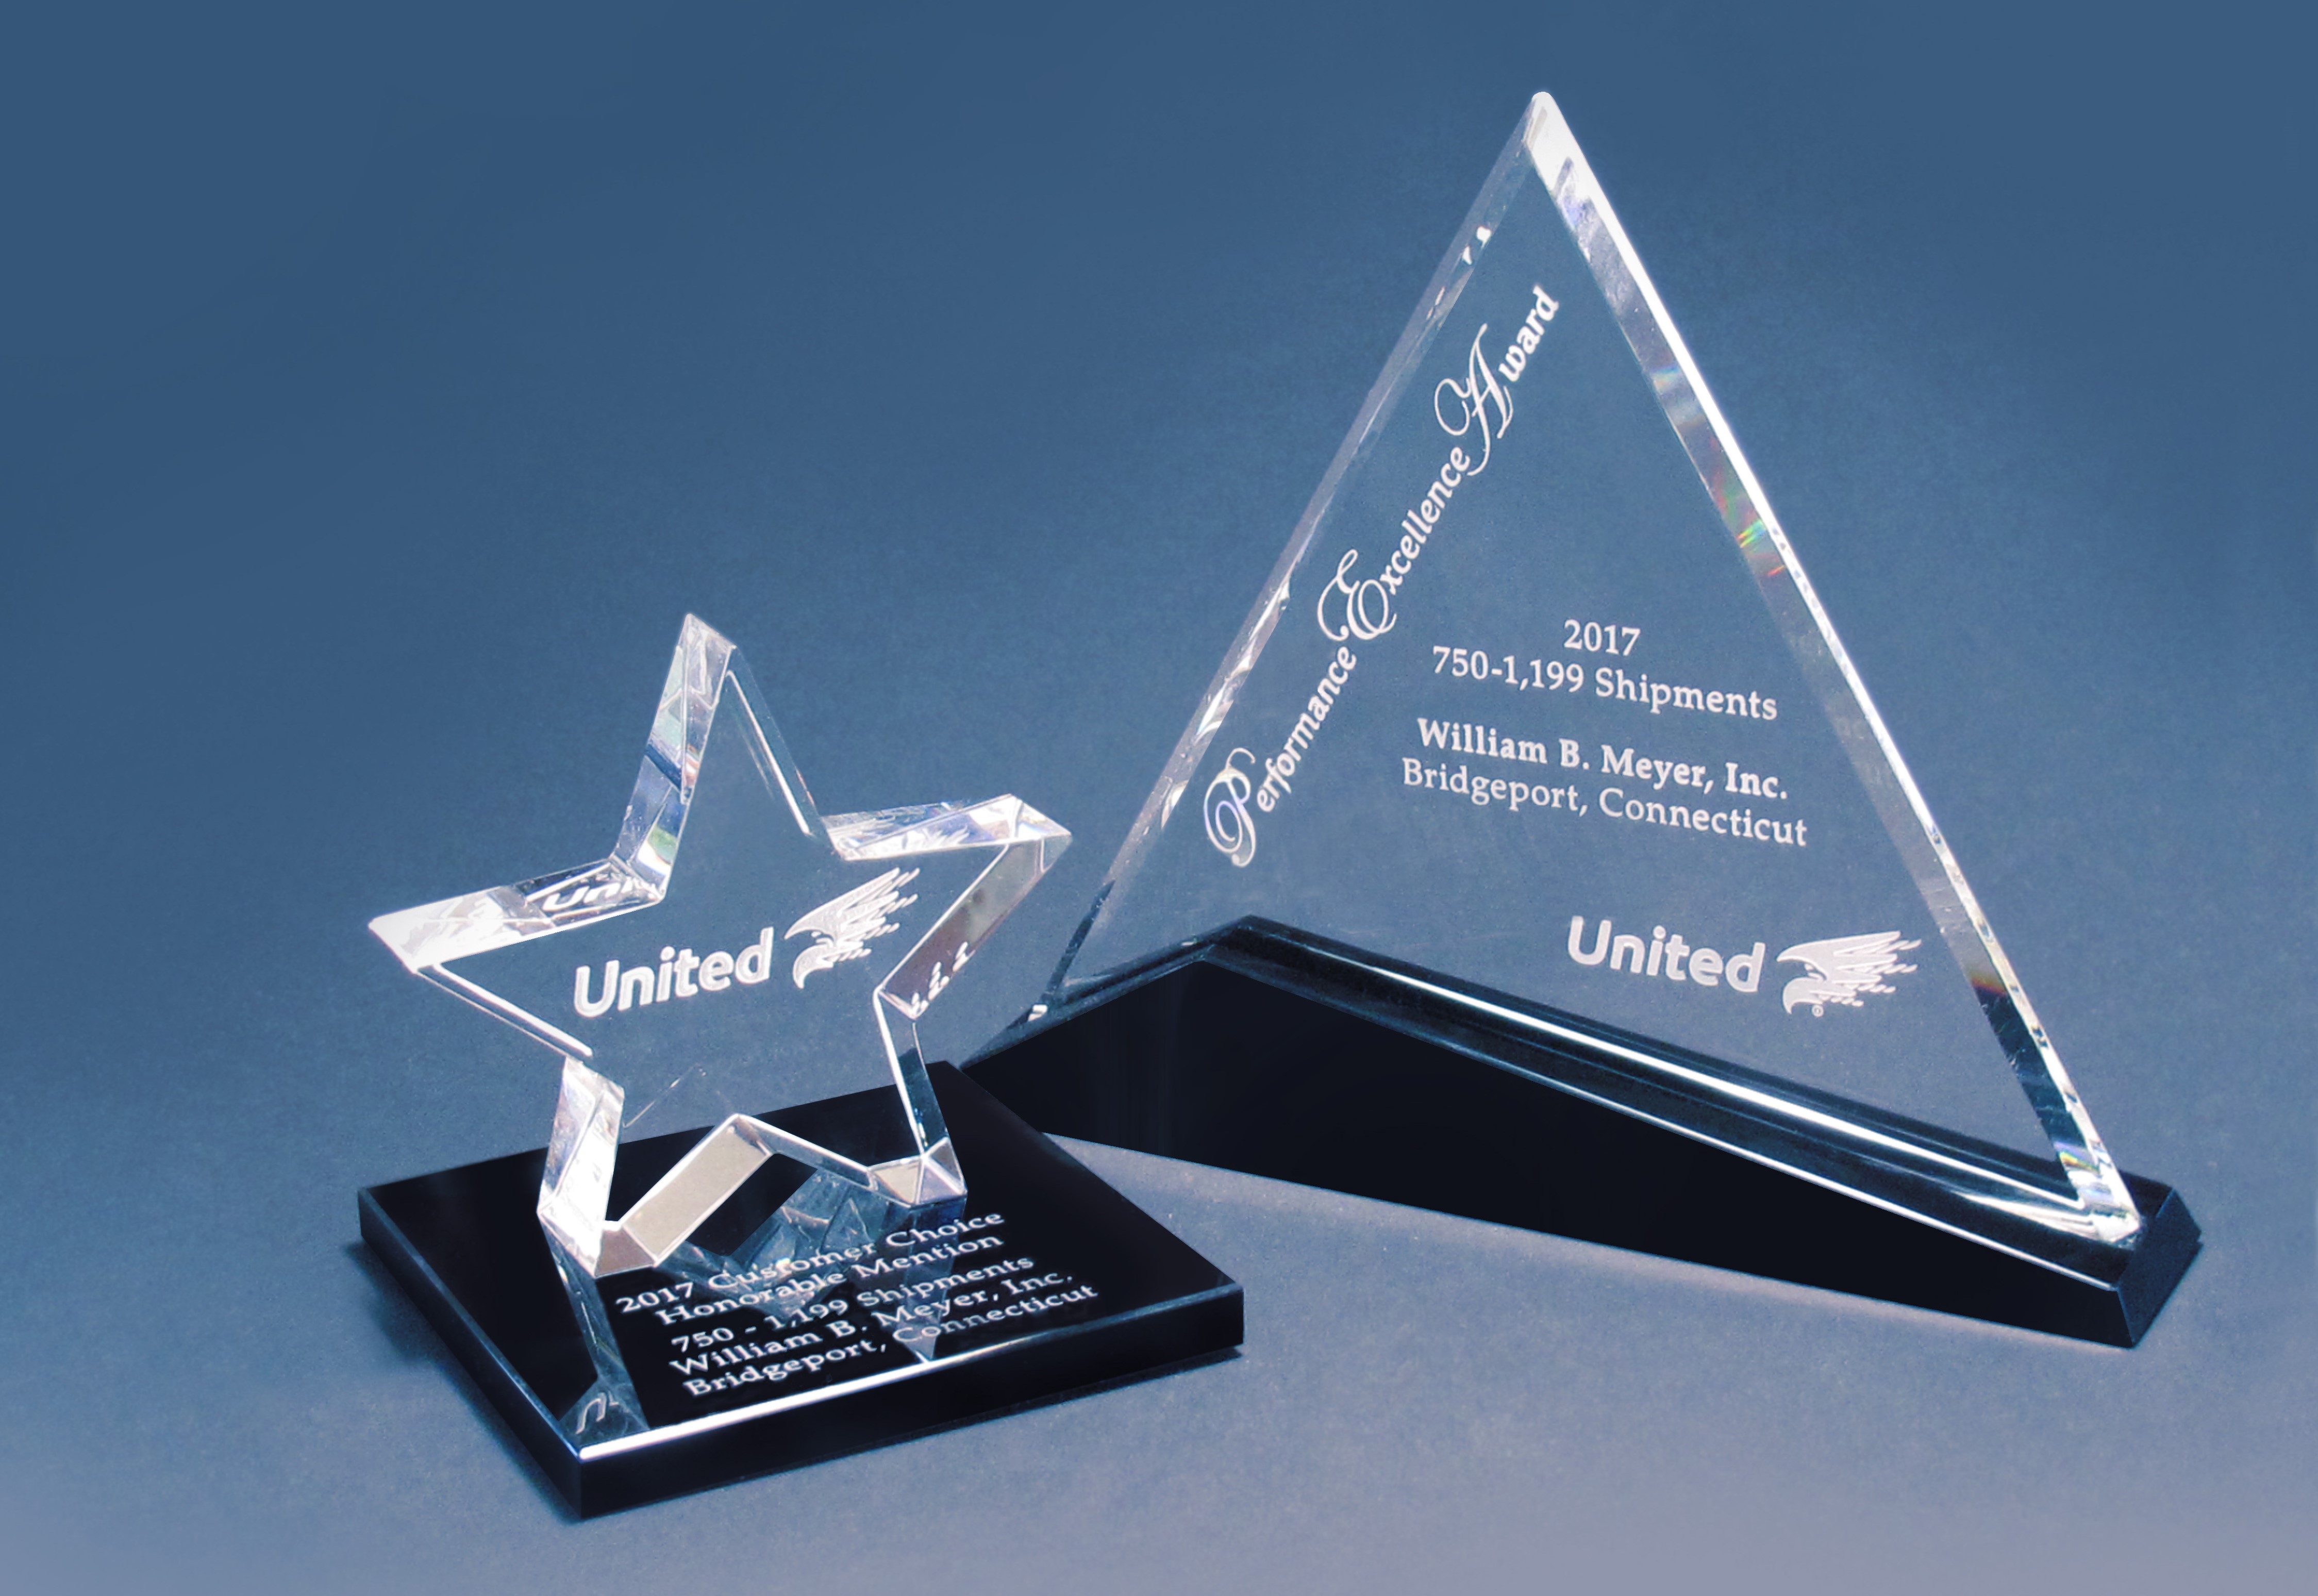 United Van Lines Recognizes William B. Meyer, Inc. Recognized for Customer Service